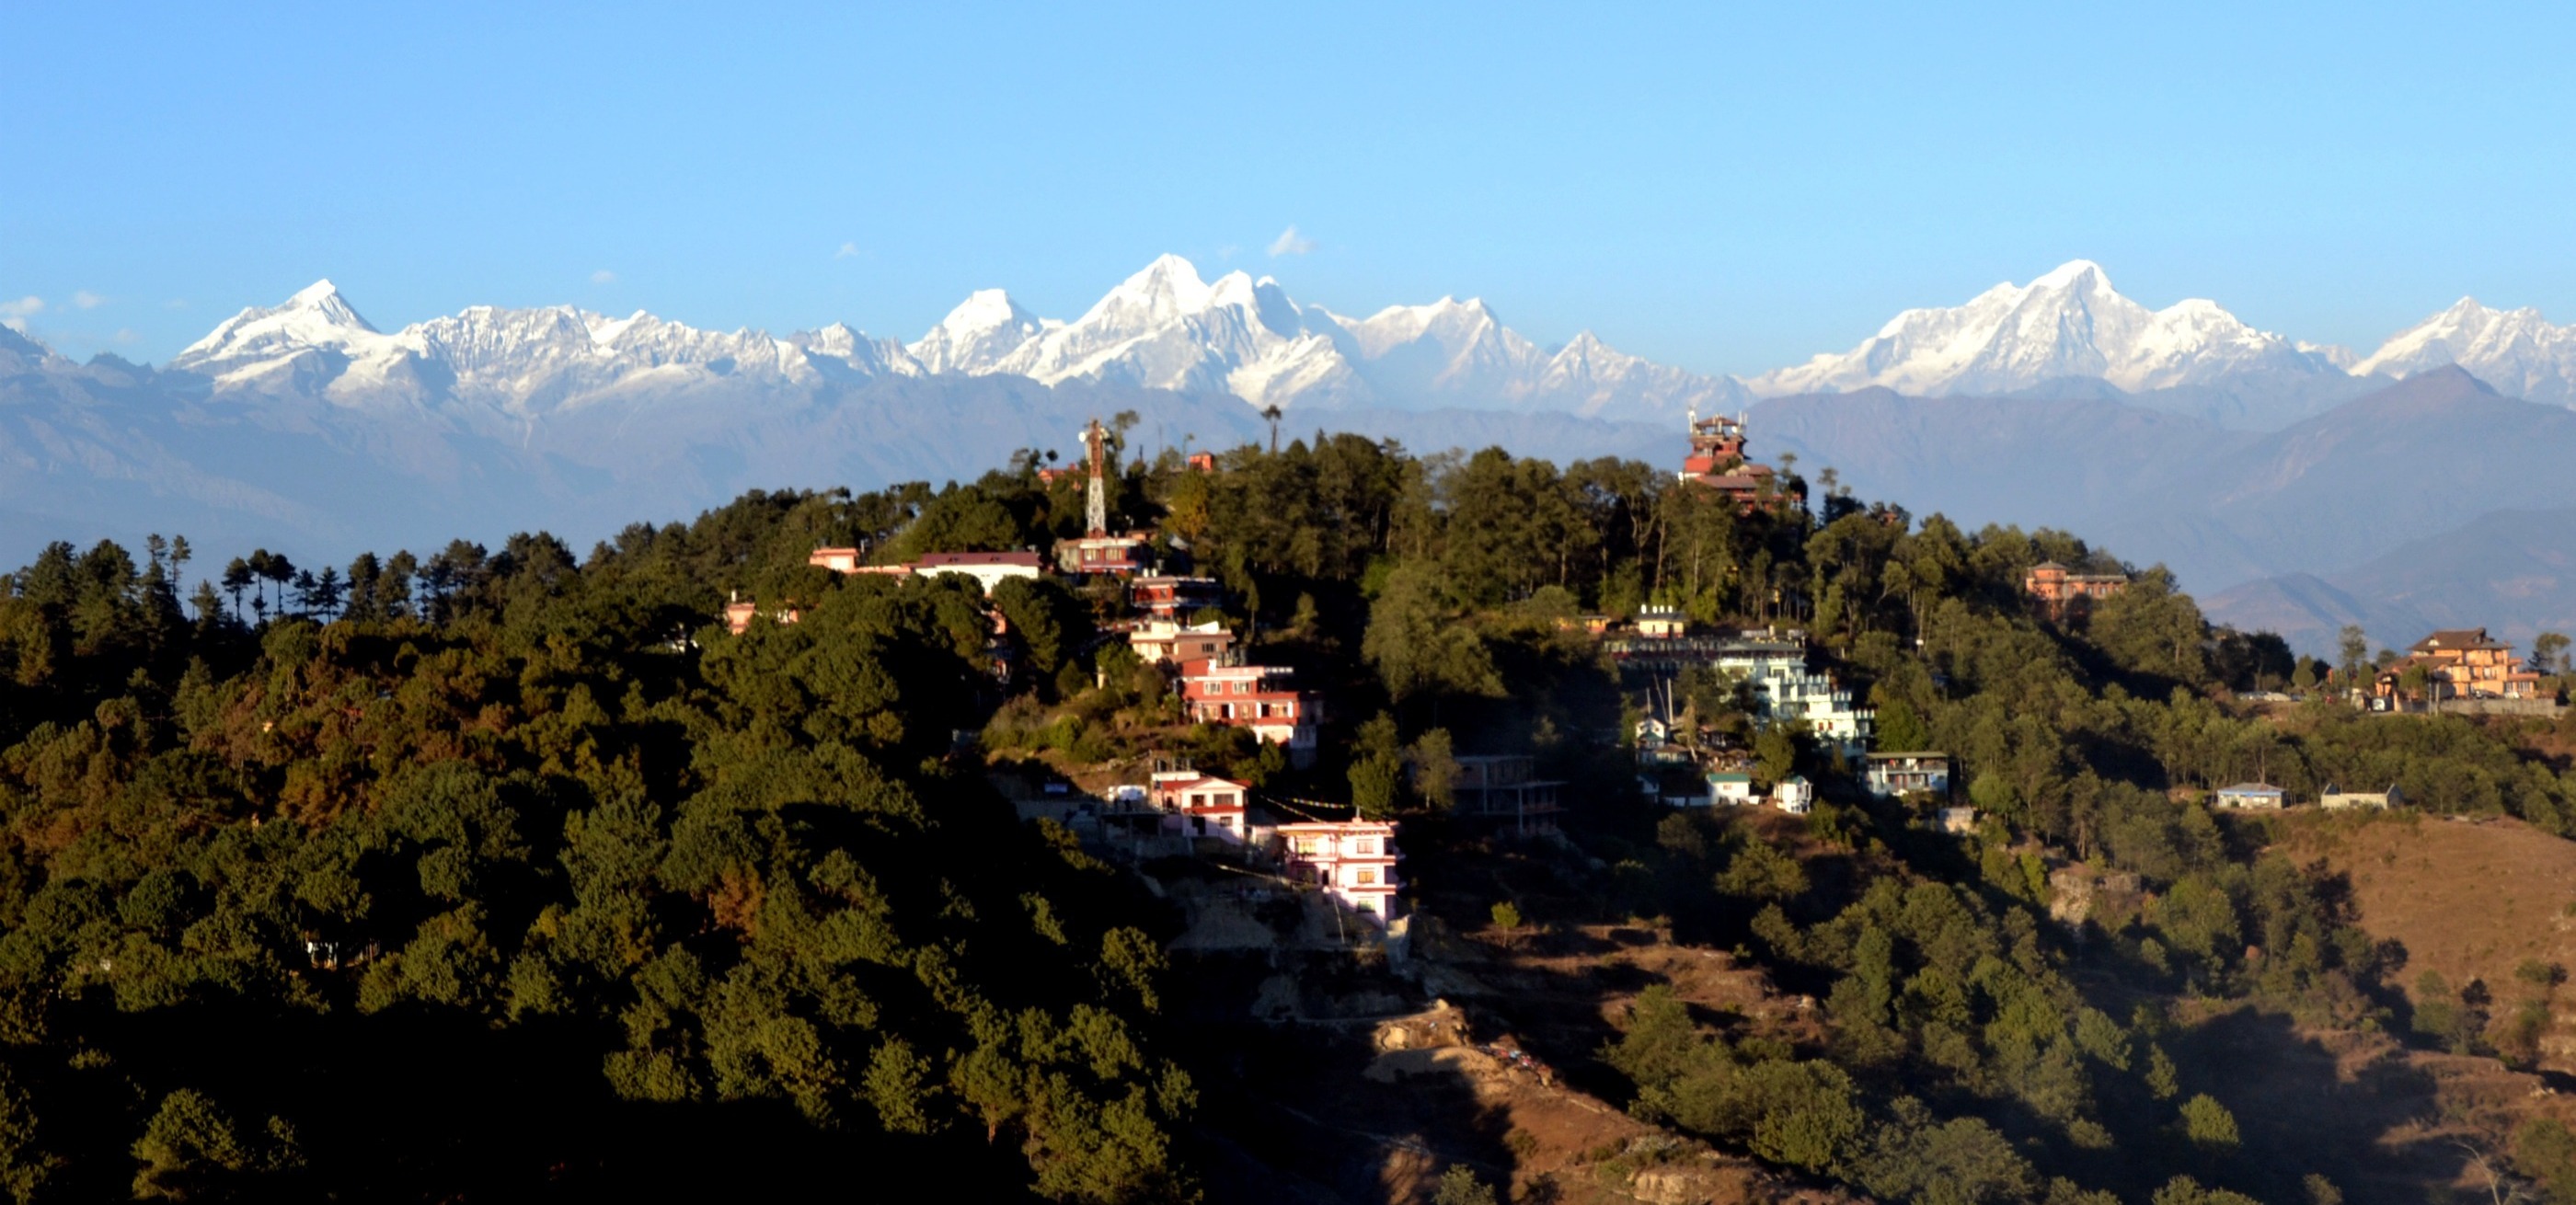 Vale de Kathmandu